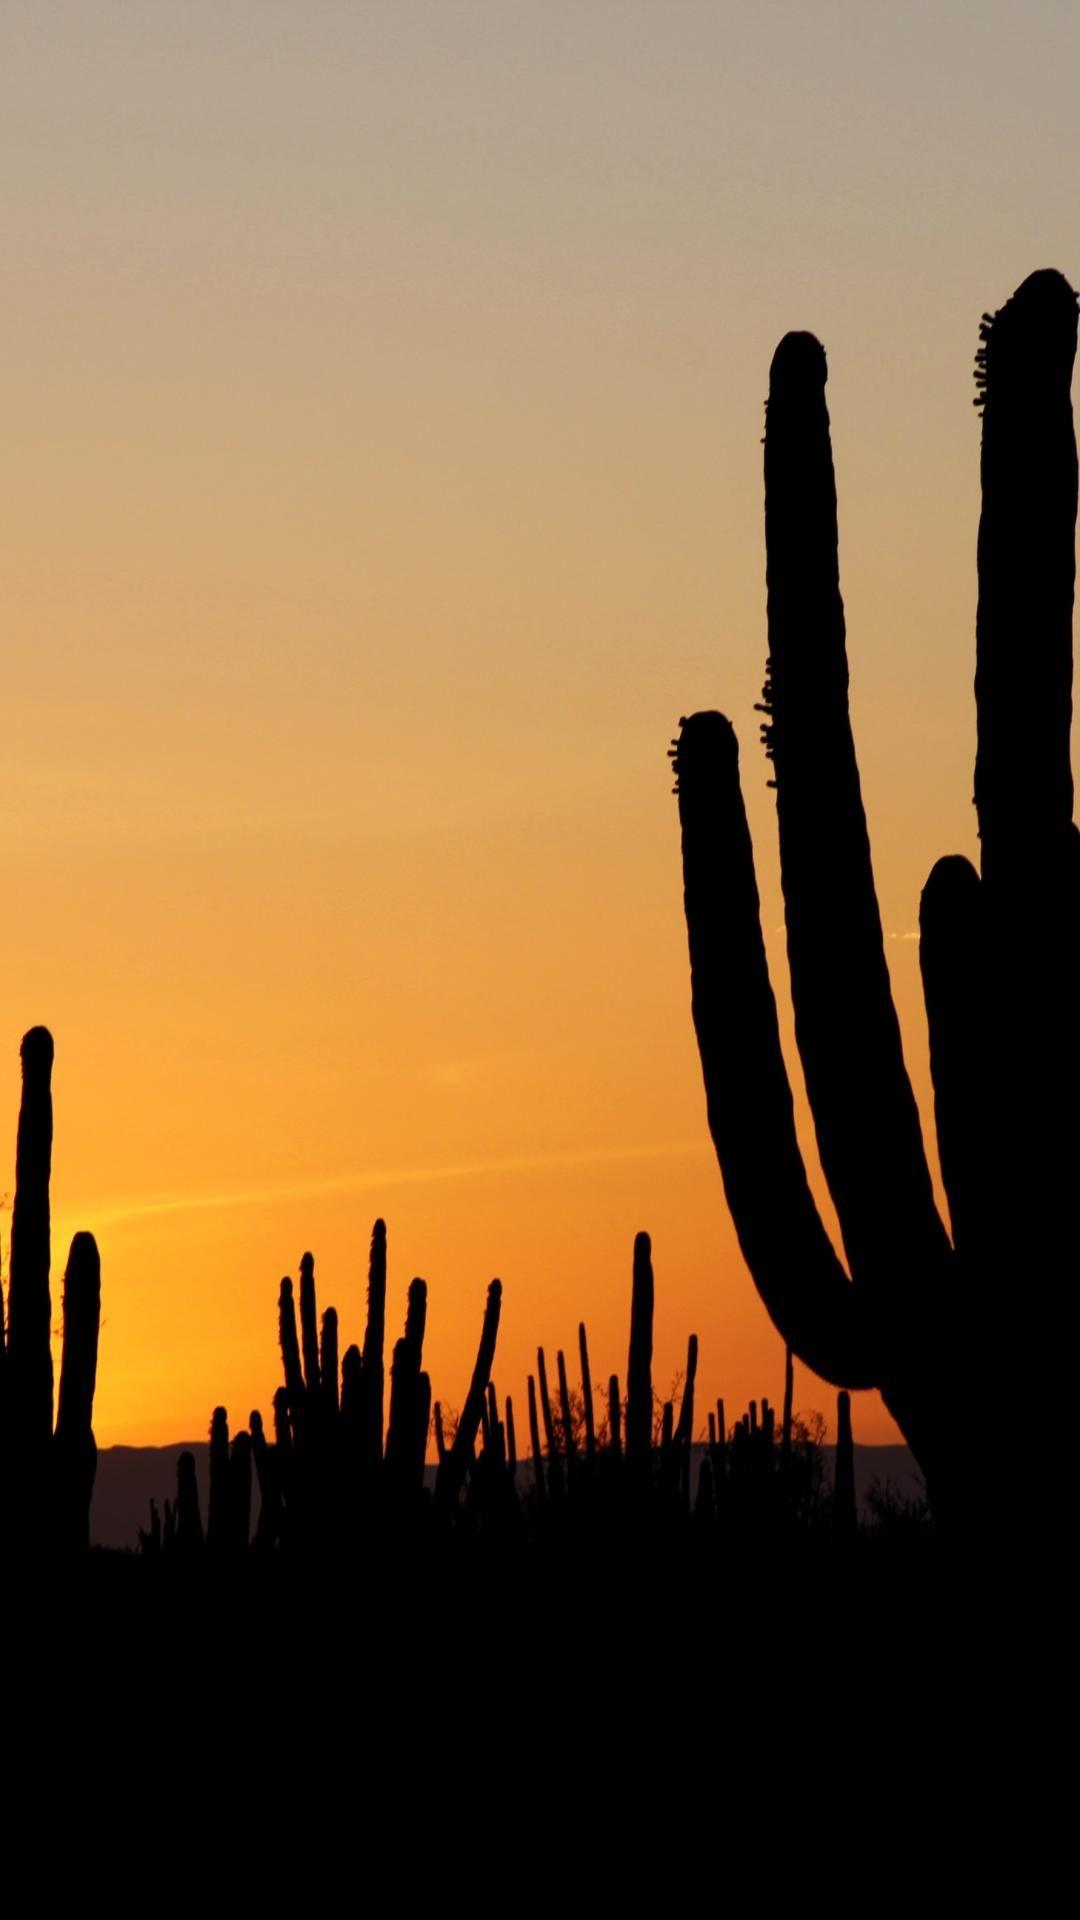 Desert Cactus Sunset Wallpapers - Top Free Desert Cactus Sunset